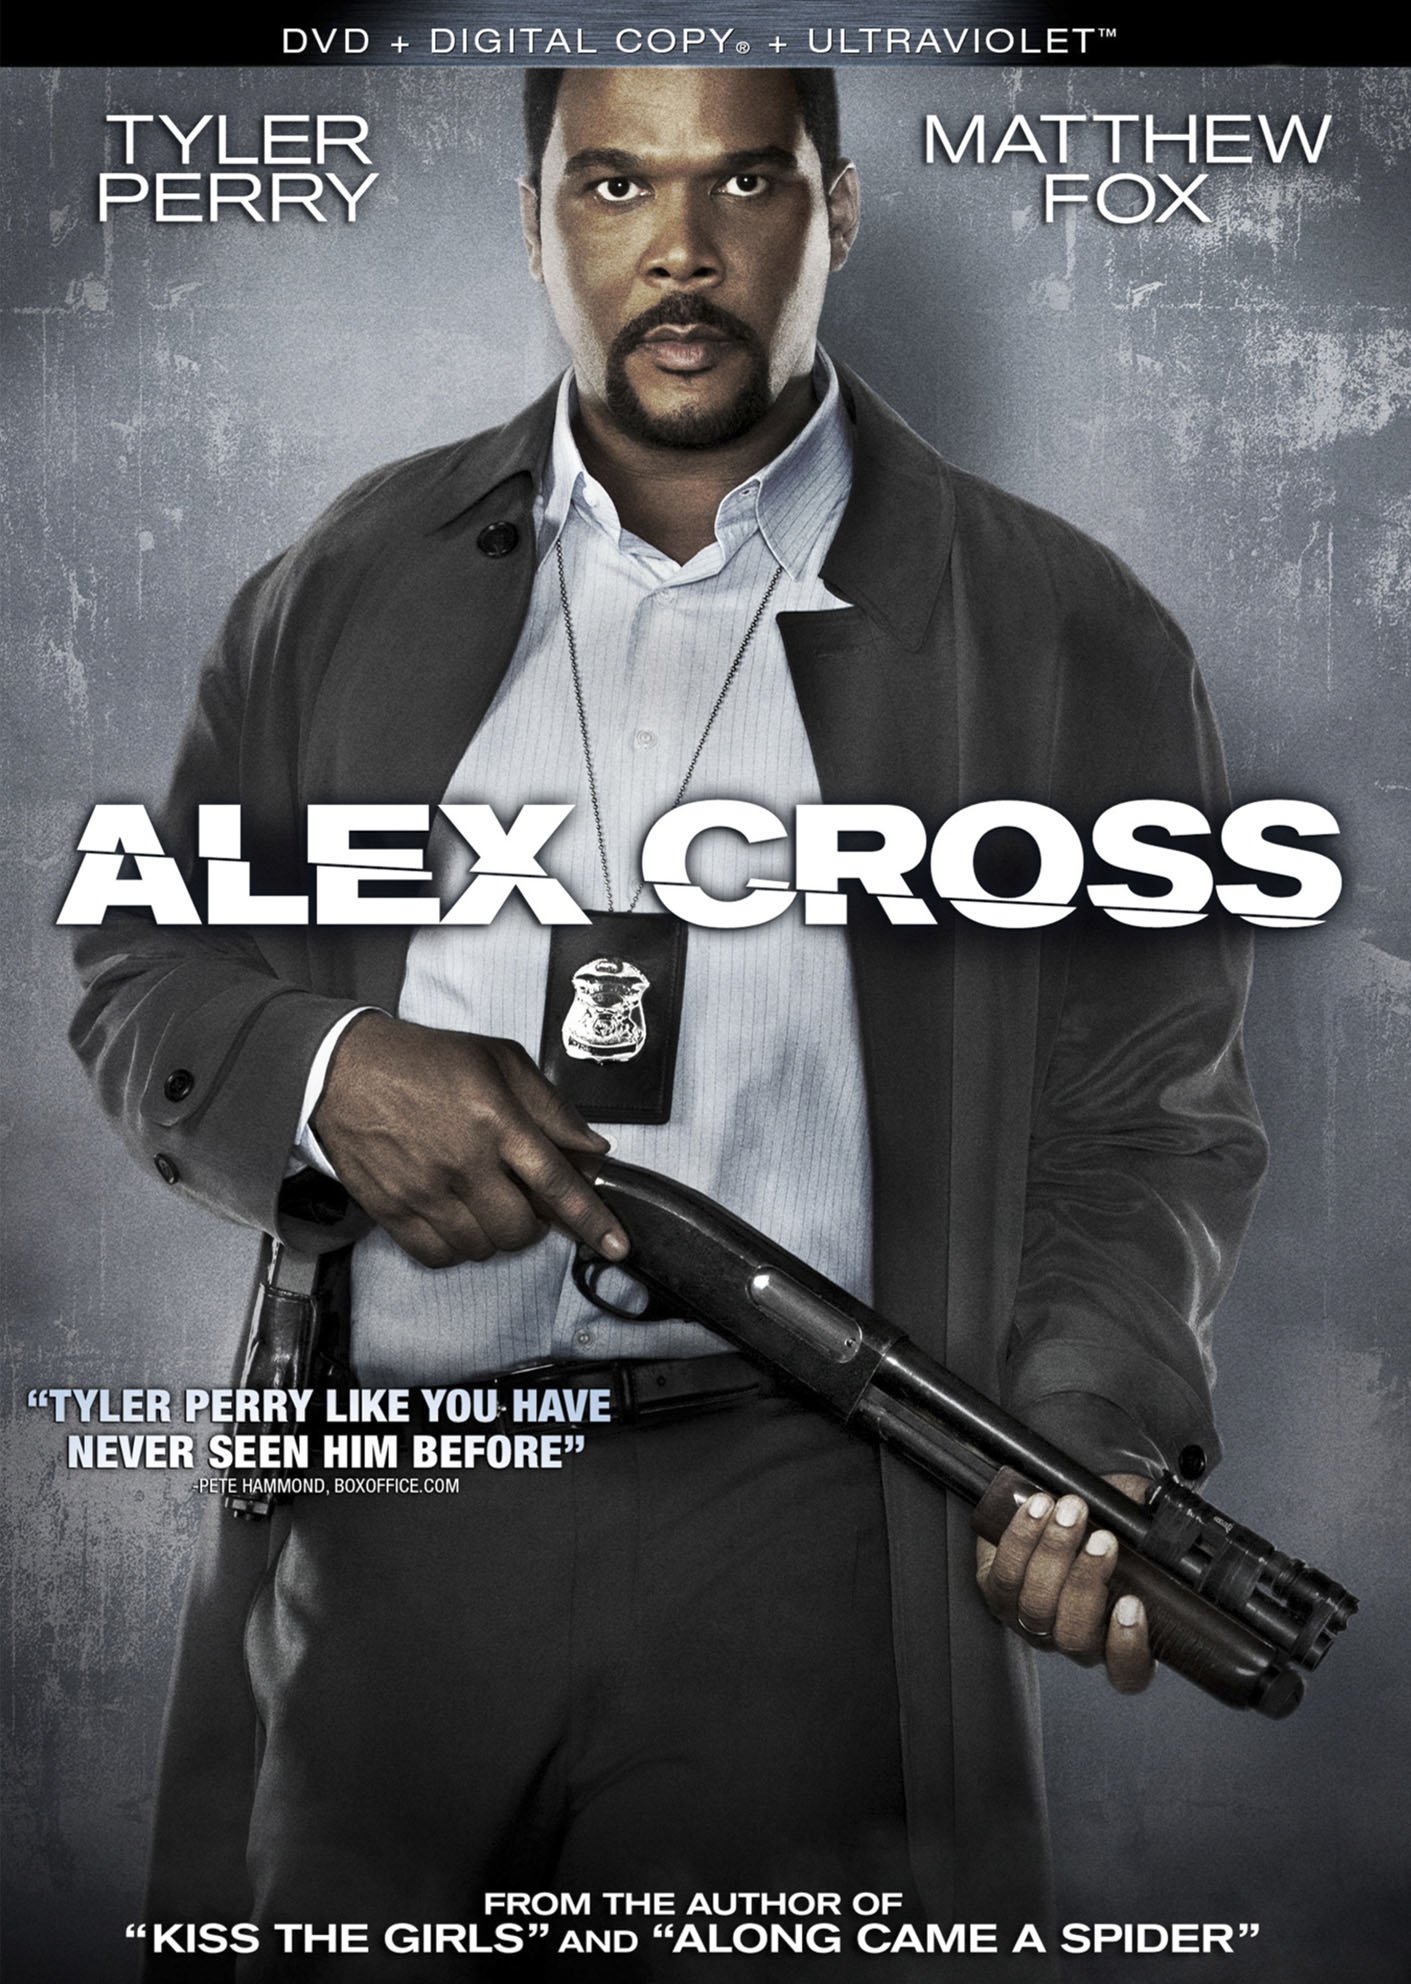 alex-cross-dvd-cover-56